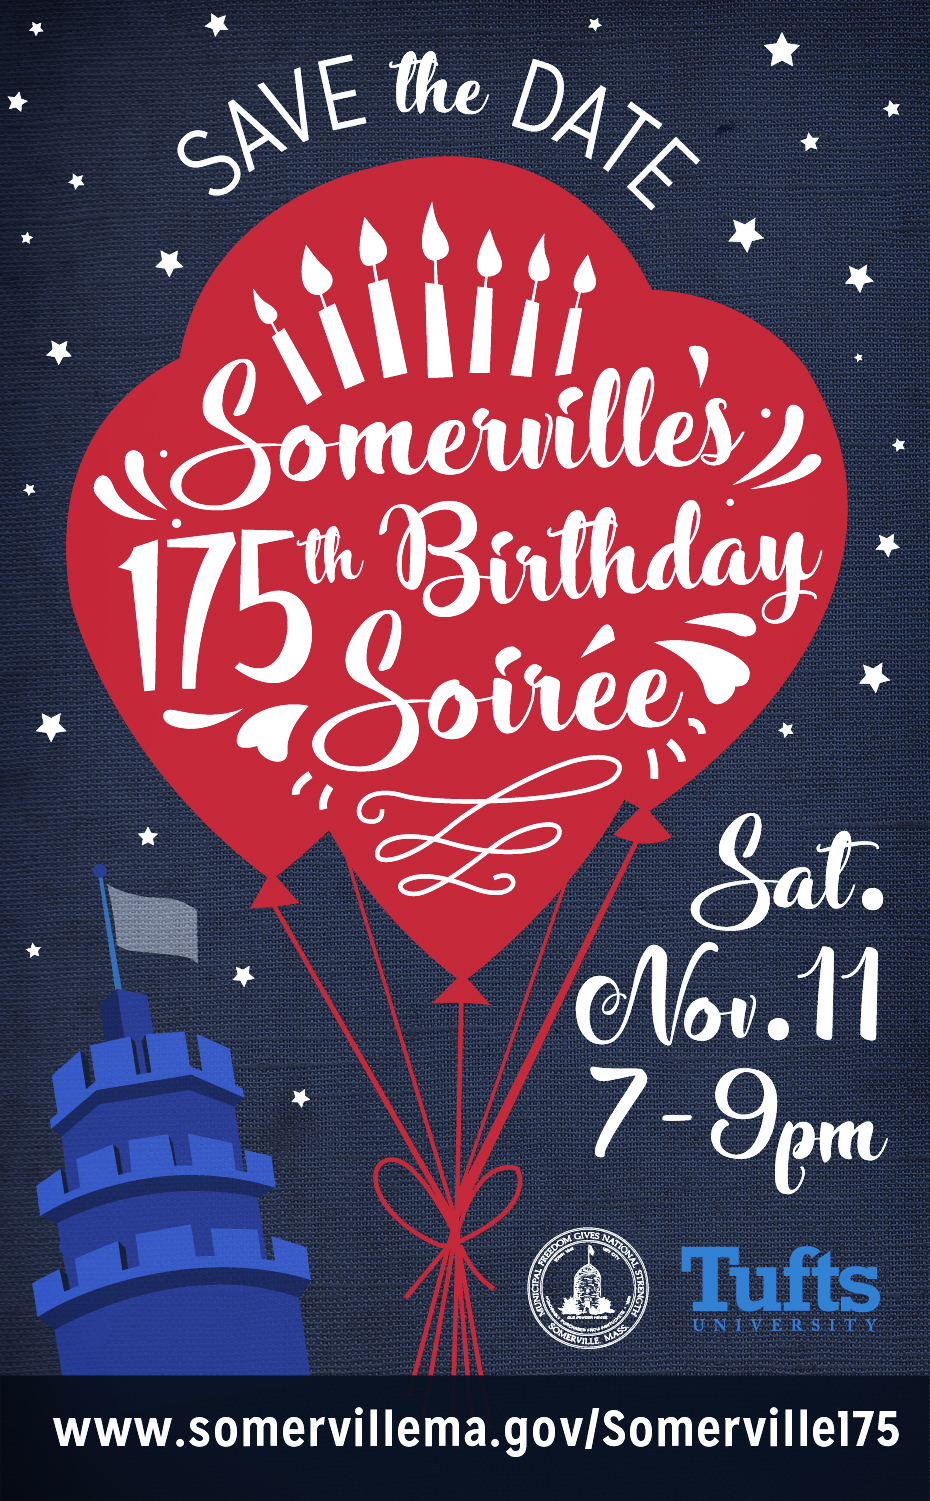 City of Somerville's 175th Birthday Soirée